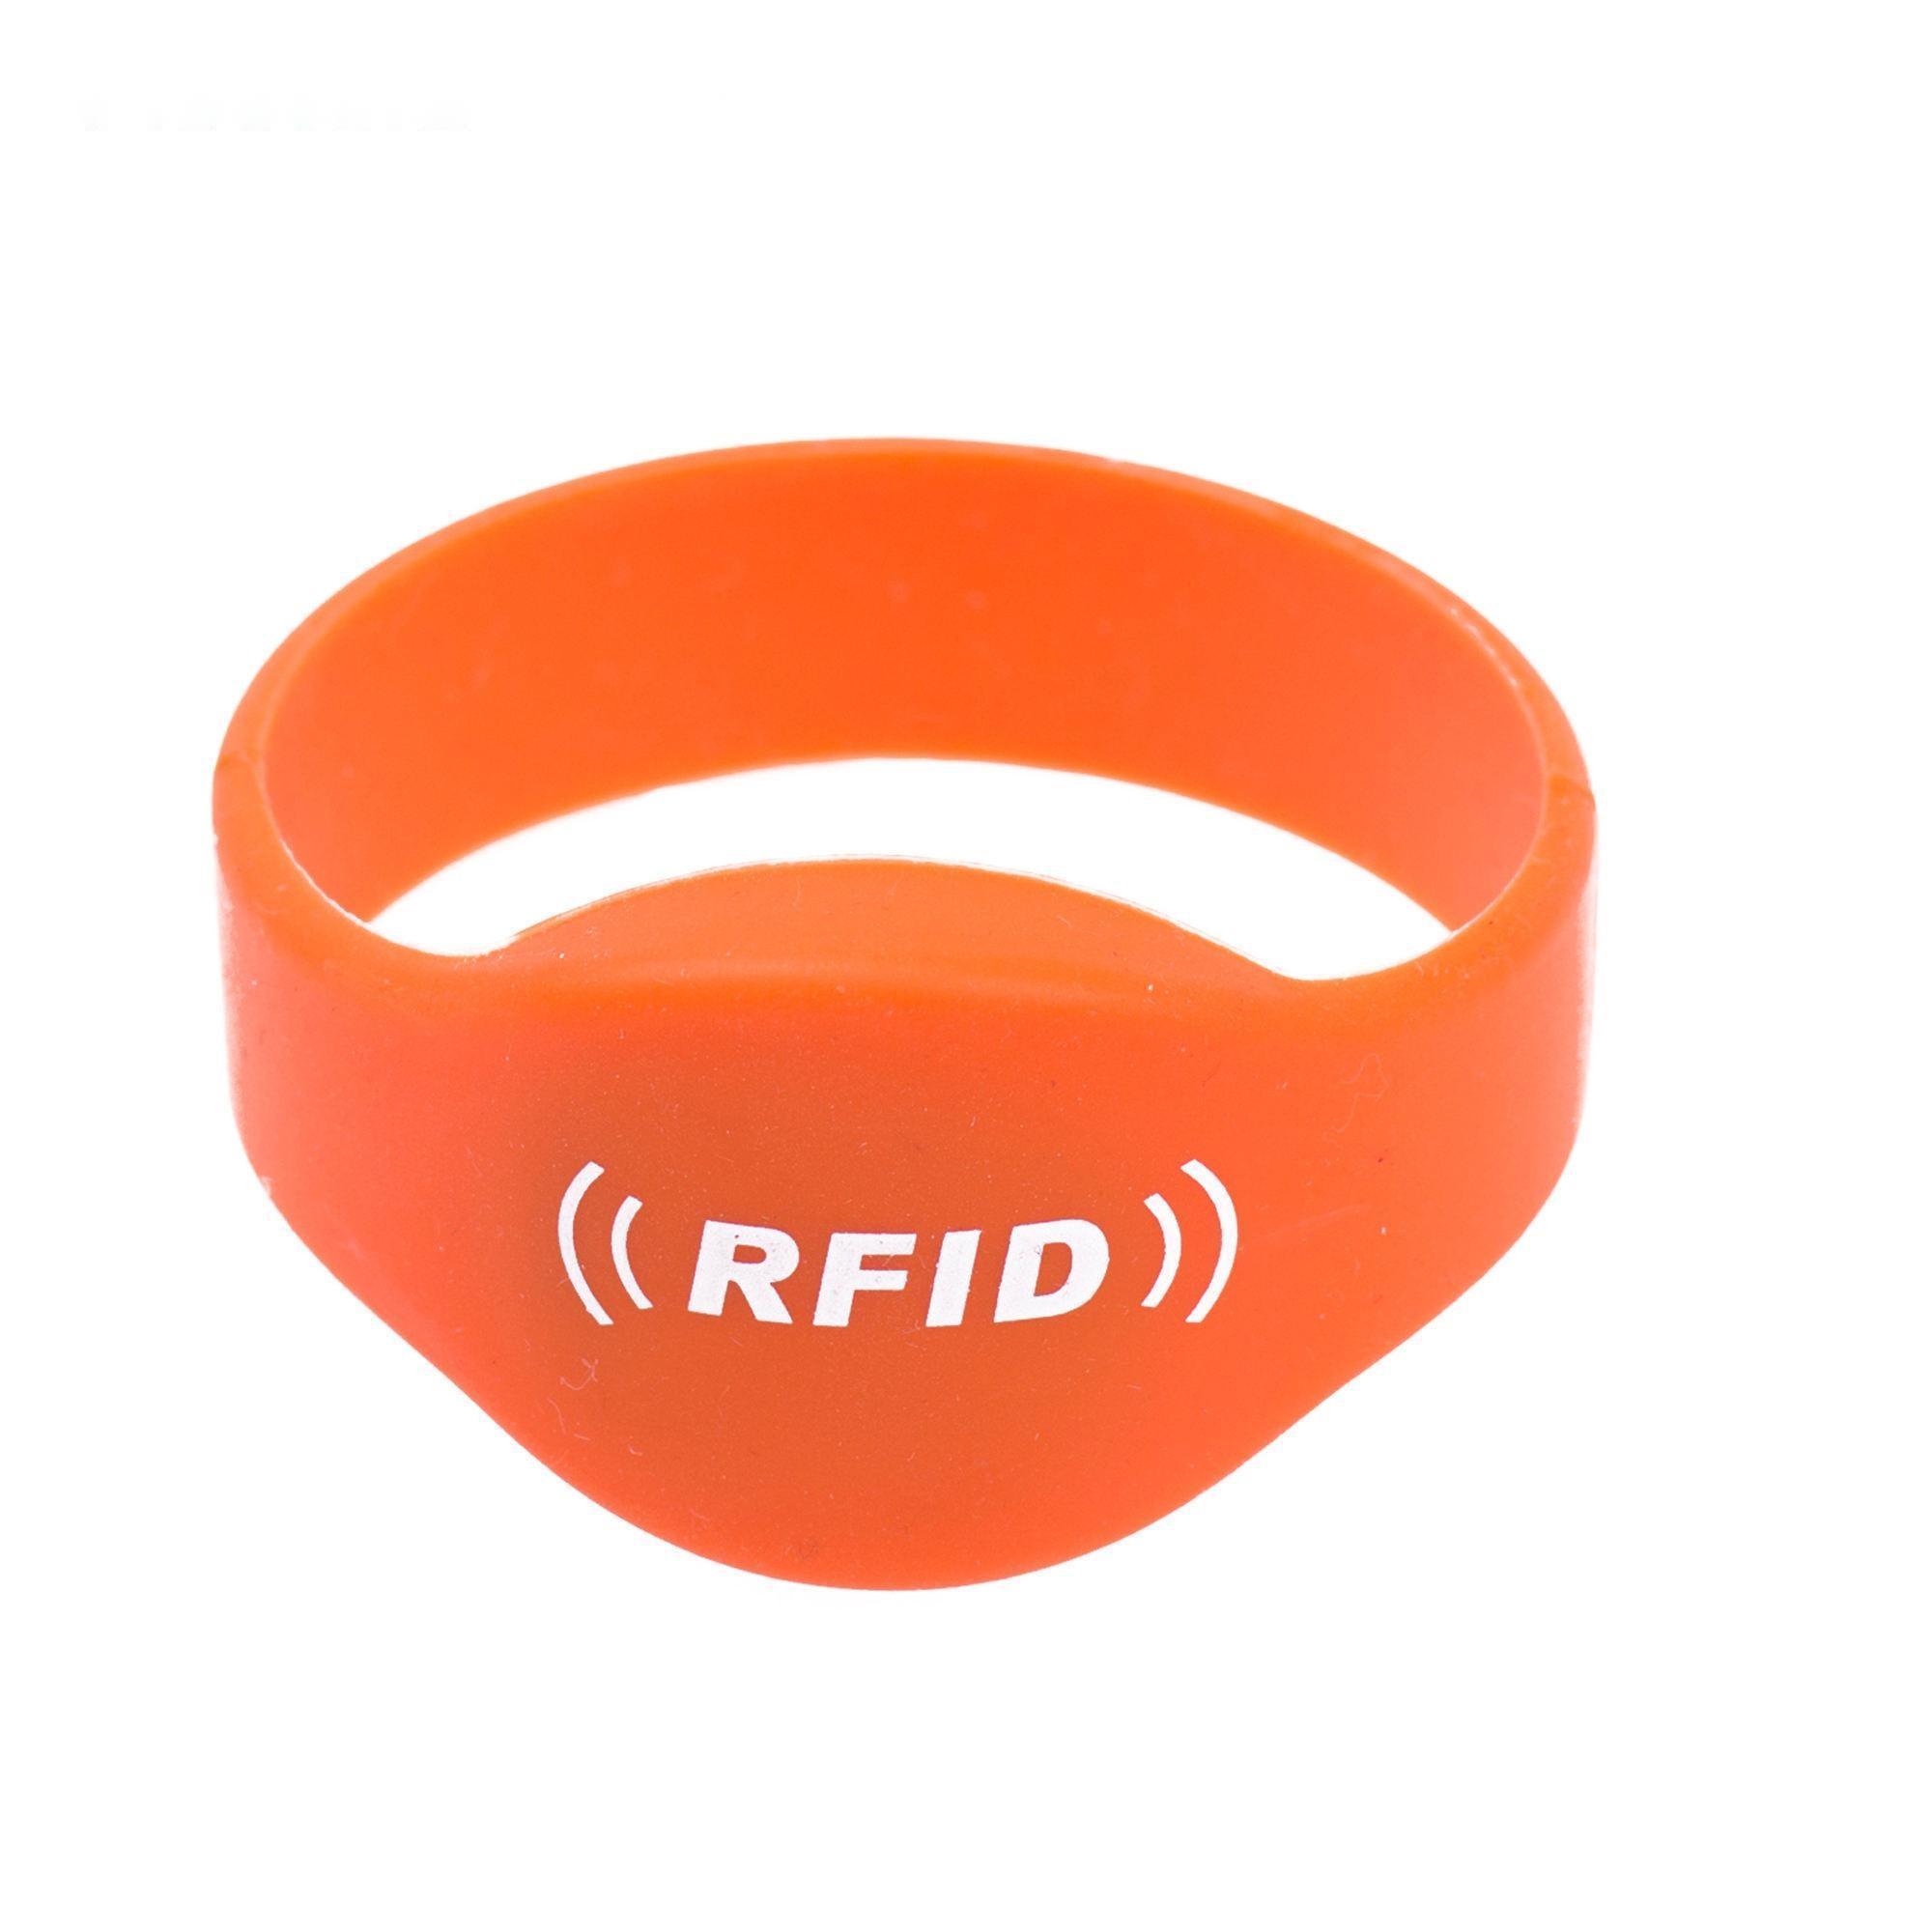 NFC_Wristbands_Type2 - Metalcard Printunique